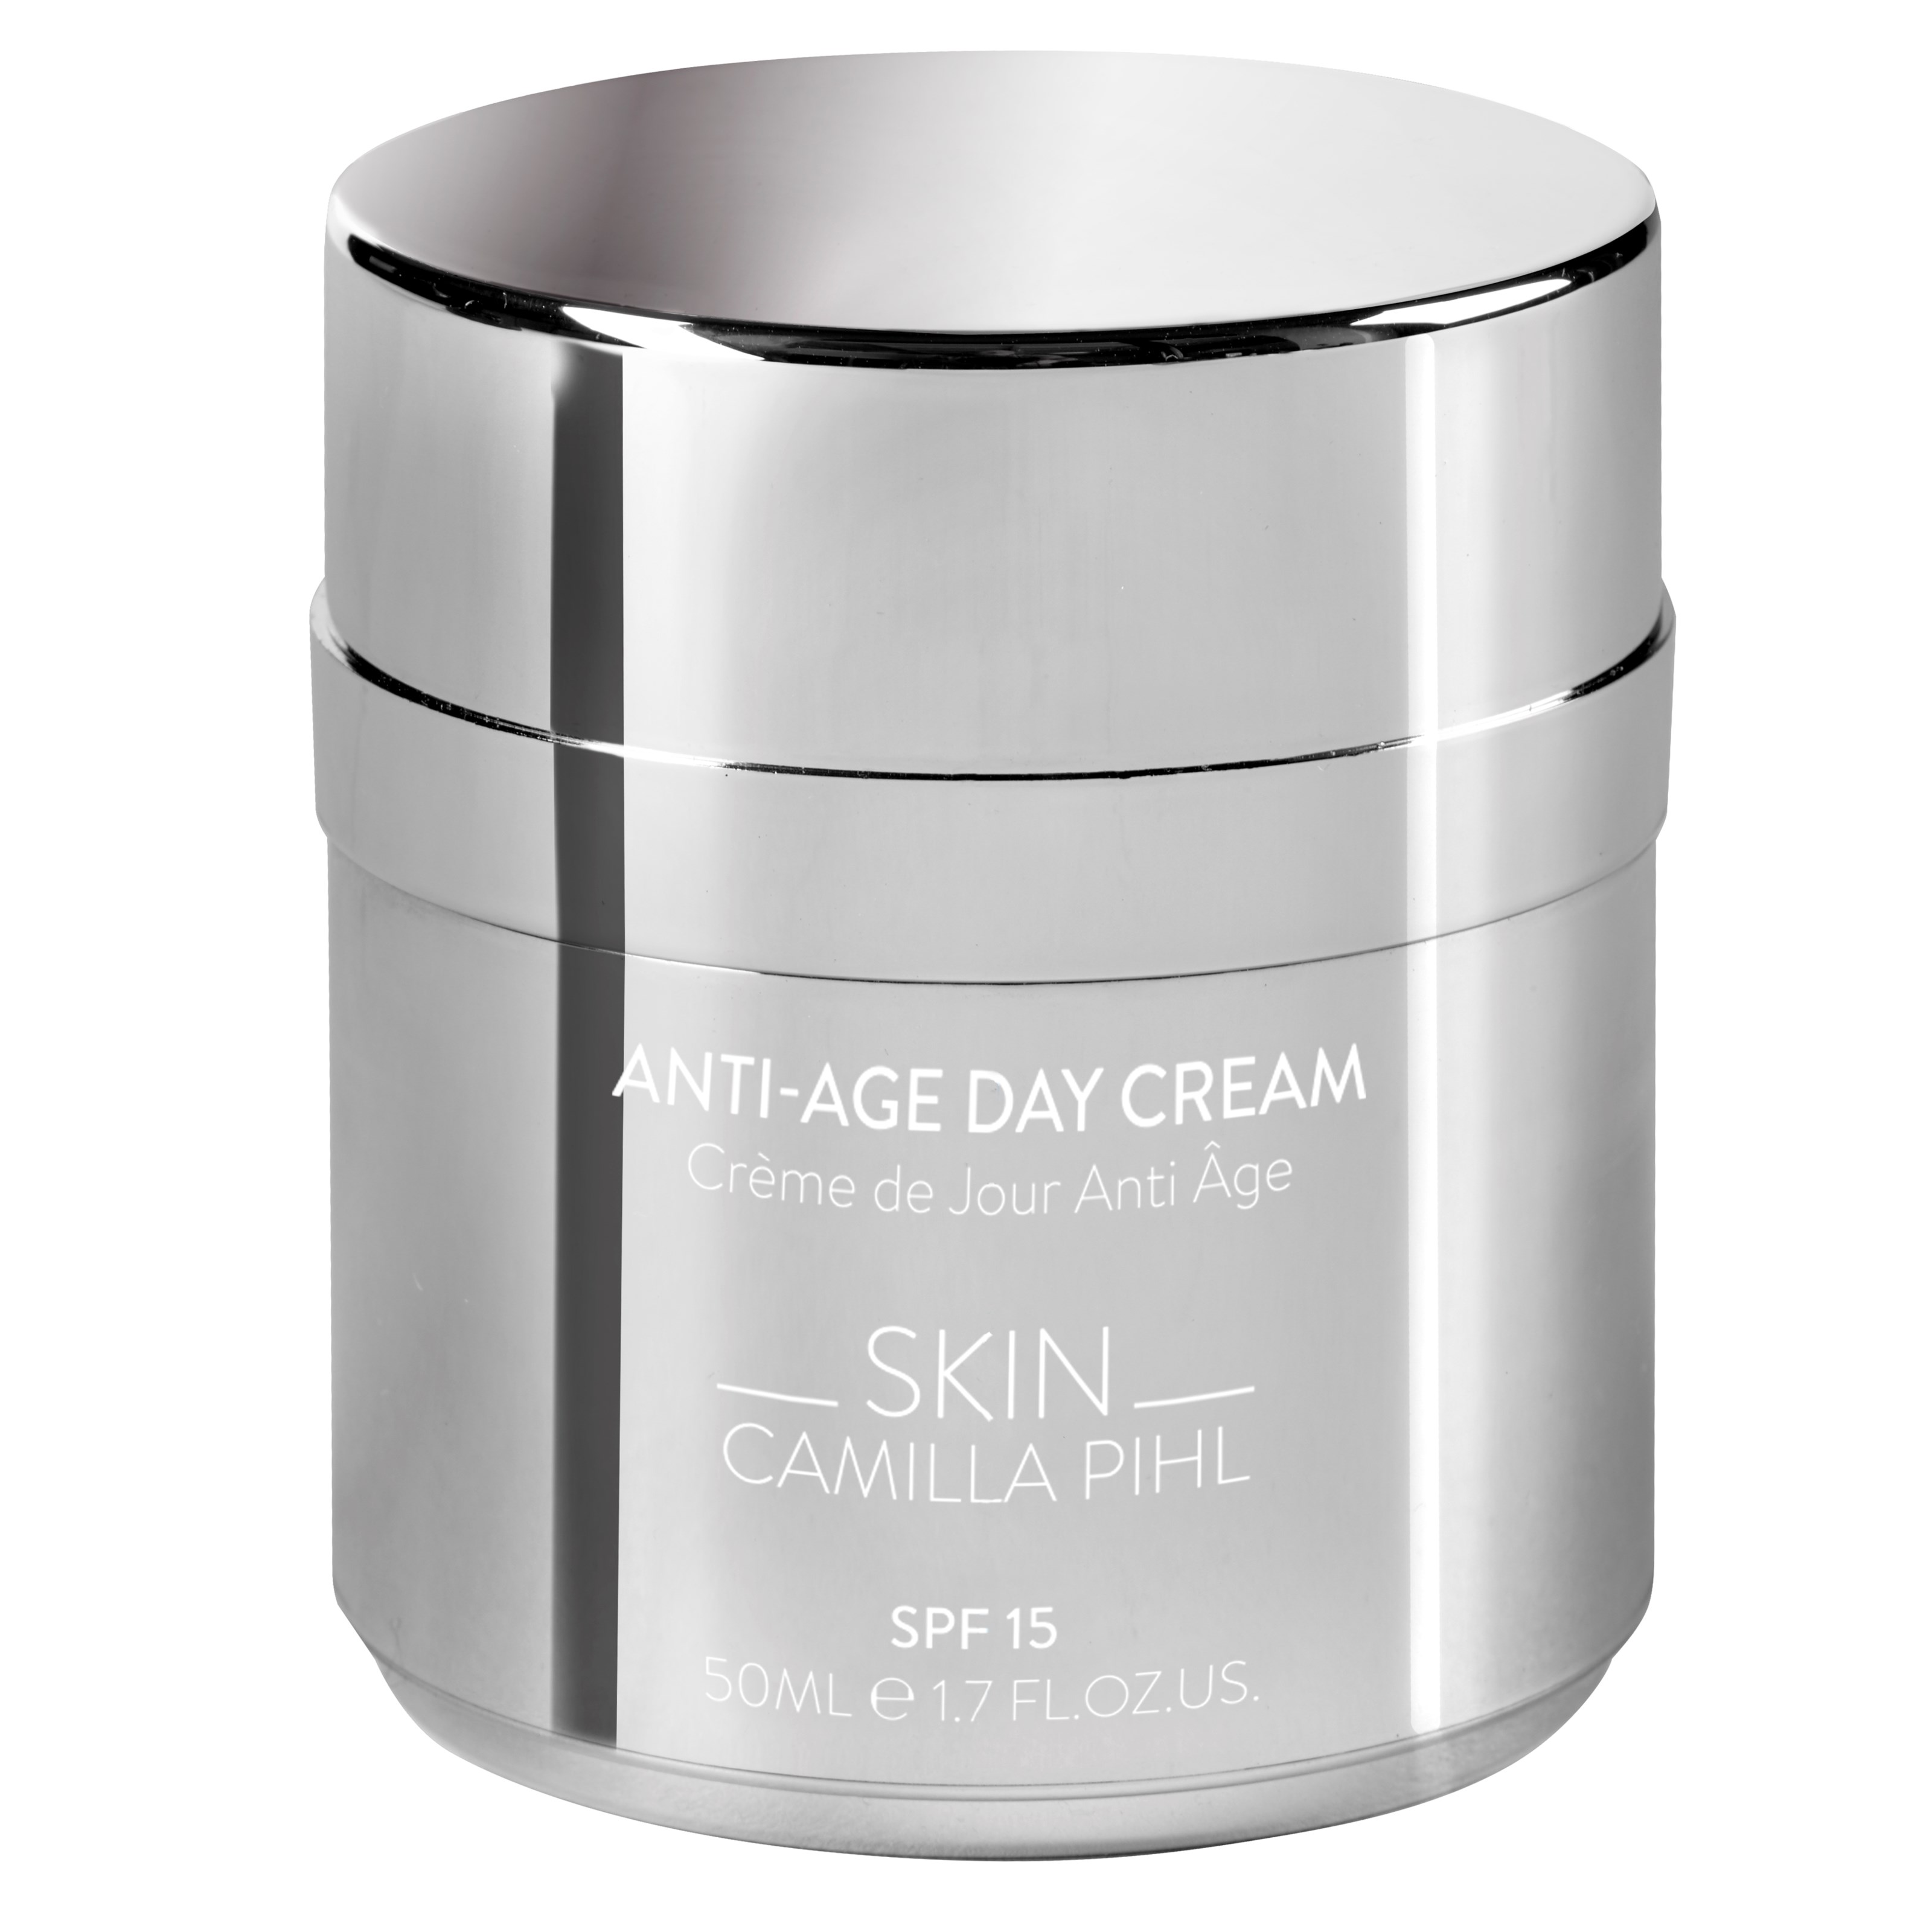 Bilde av Camilla Pihl Cosmetics Skin Anti Age Day Cream 50 Ml